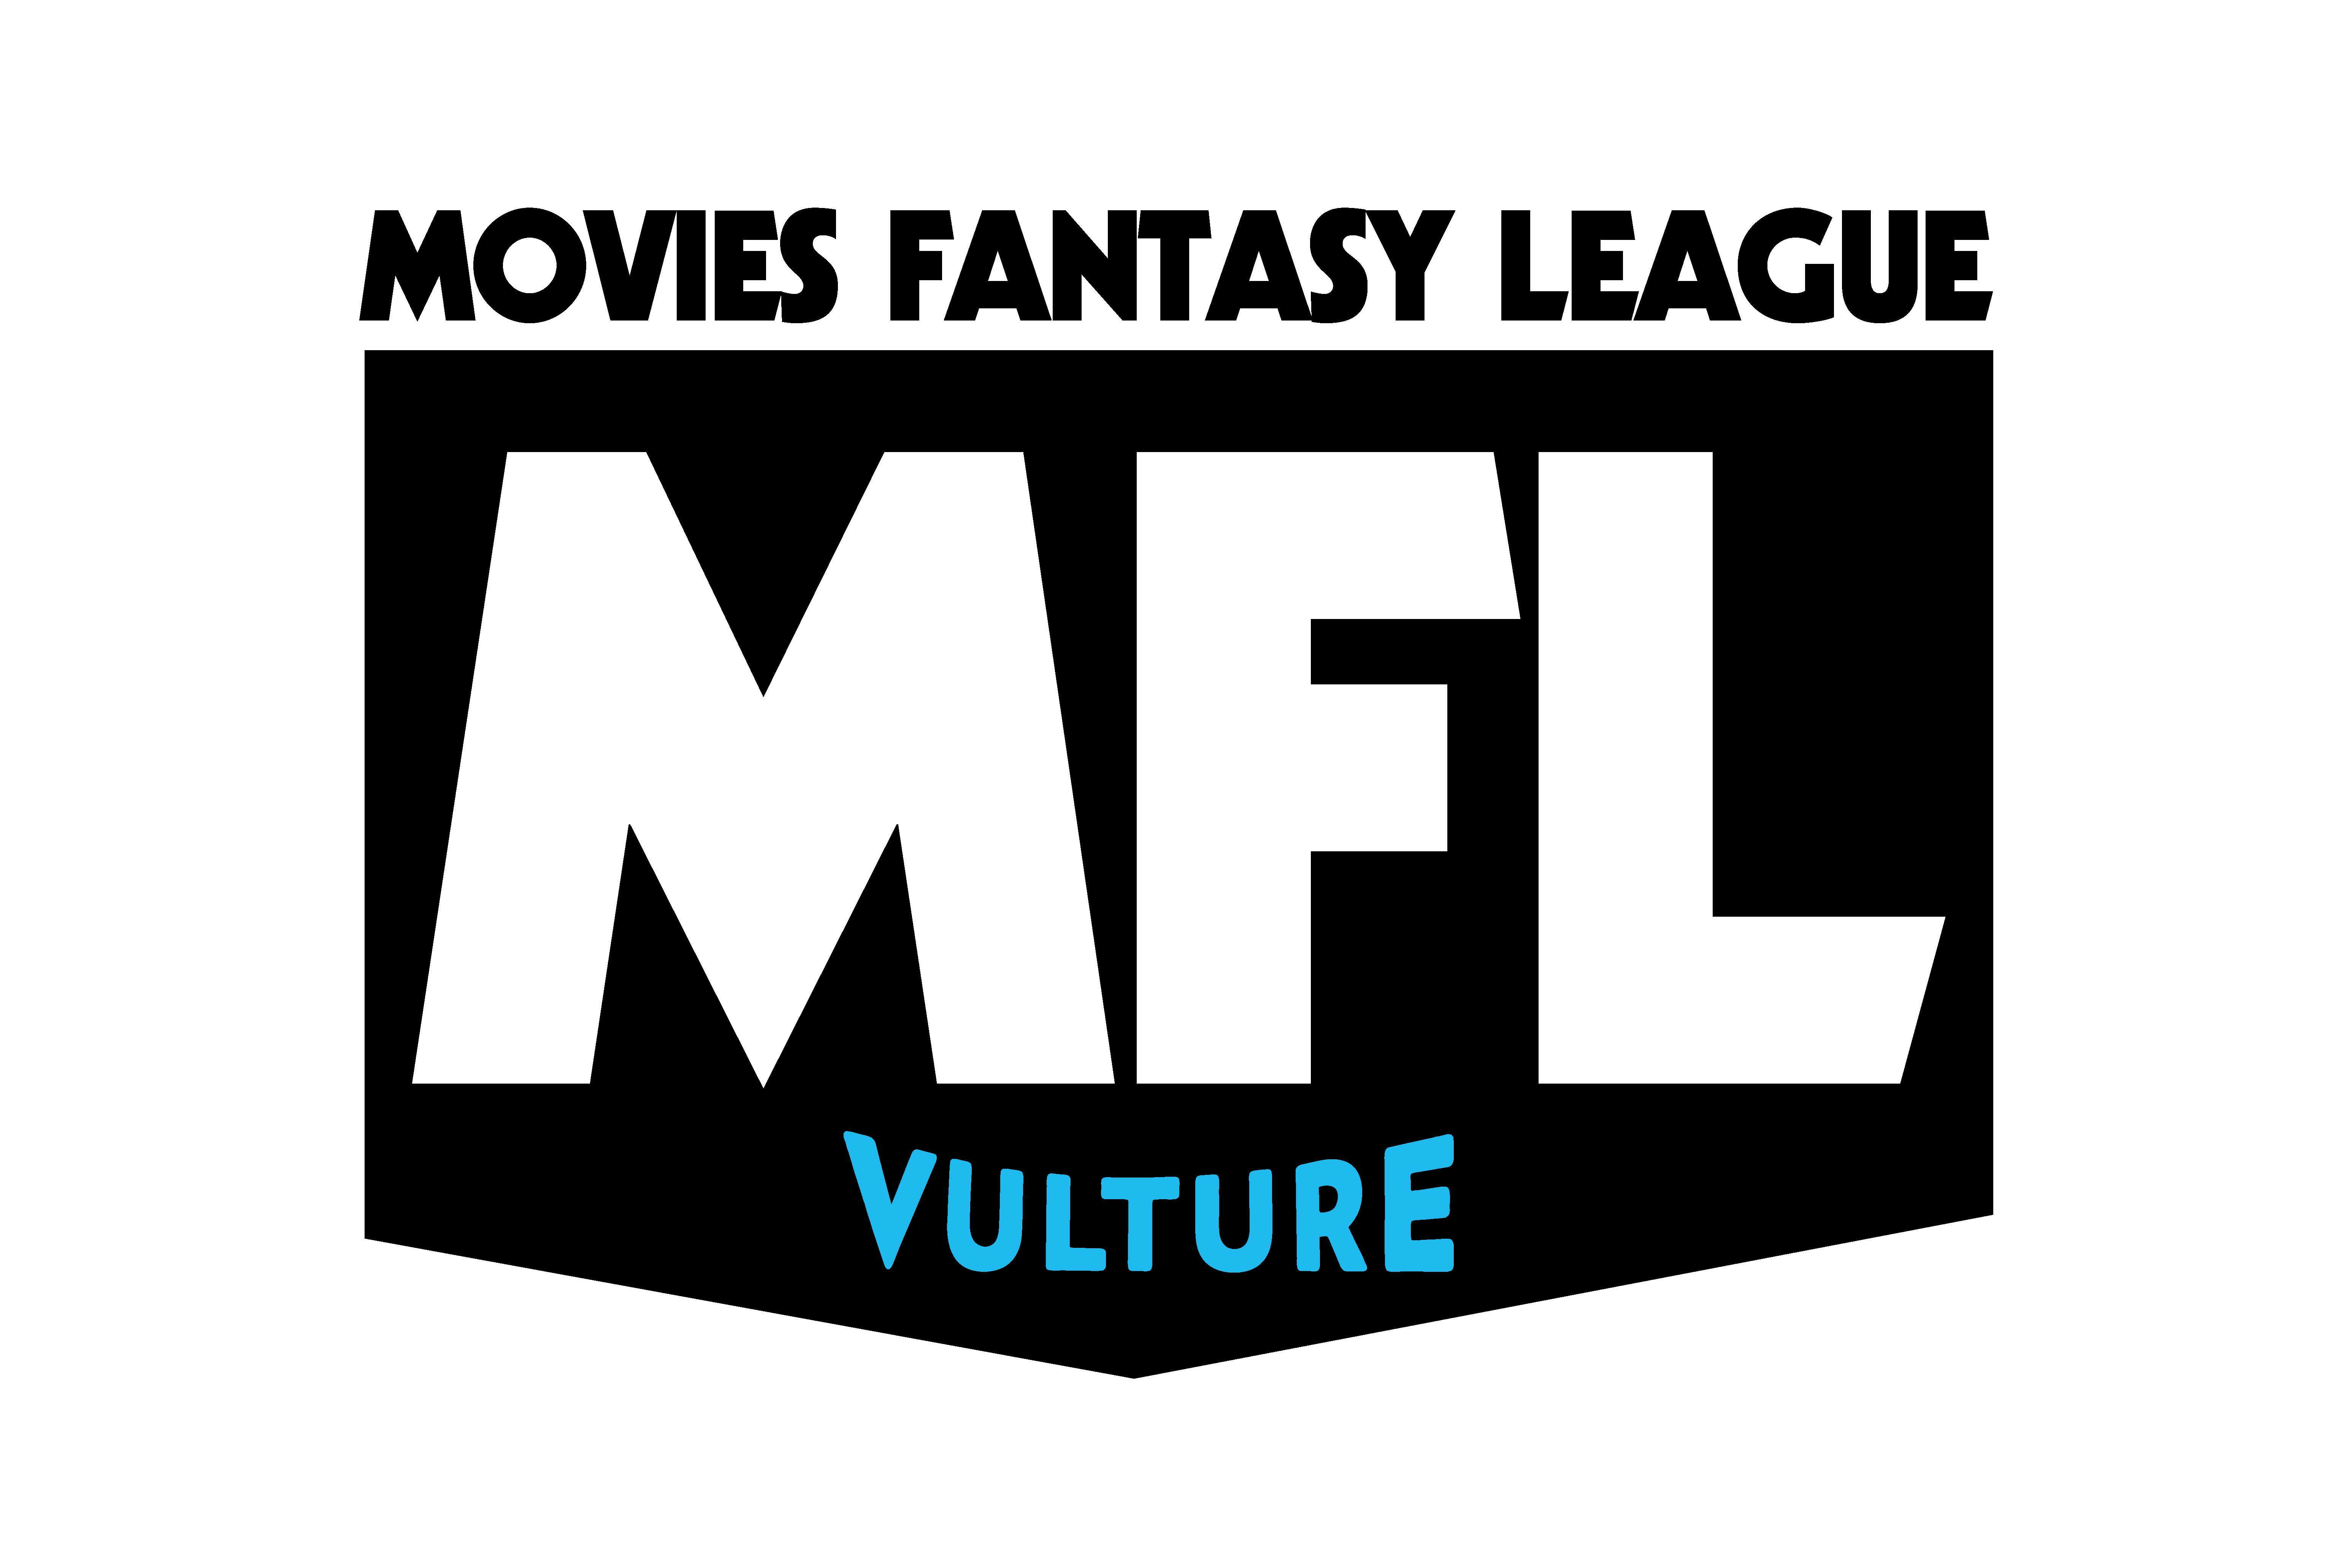 Bono Ki Xx Video - The Movies Fantasy League Has Its Champion